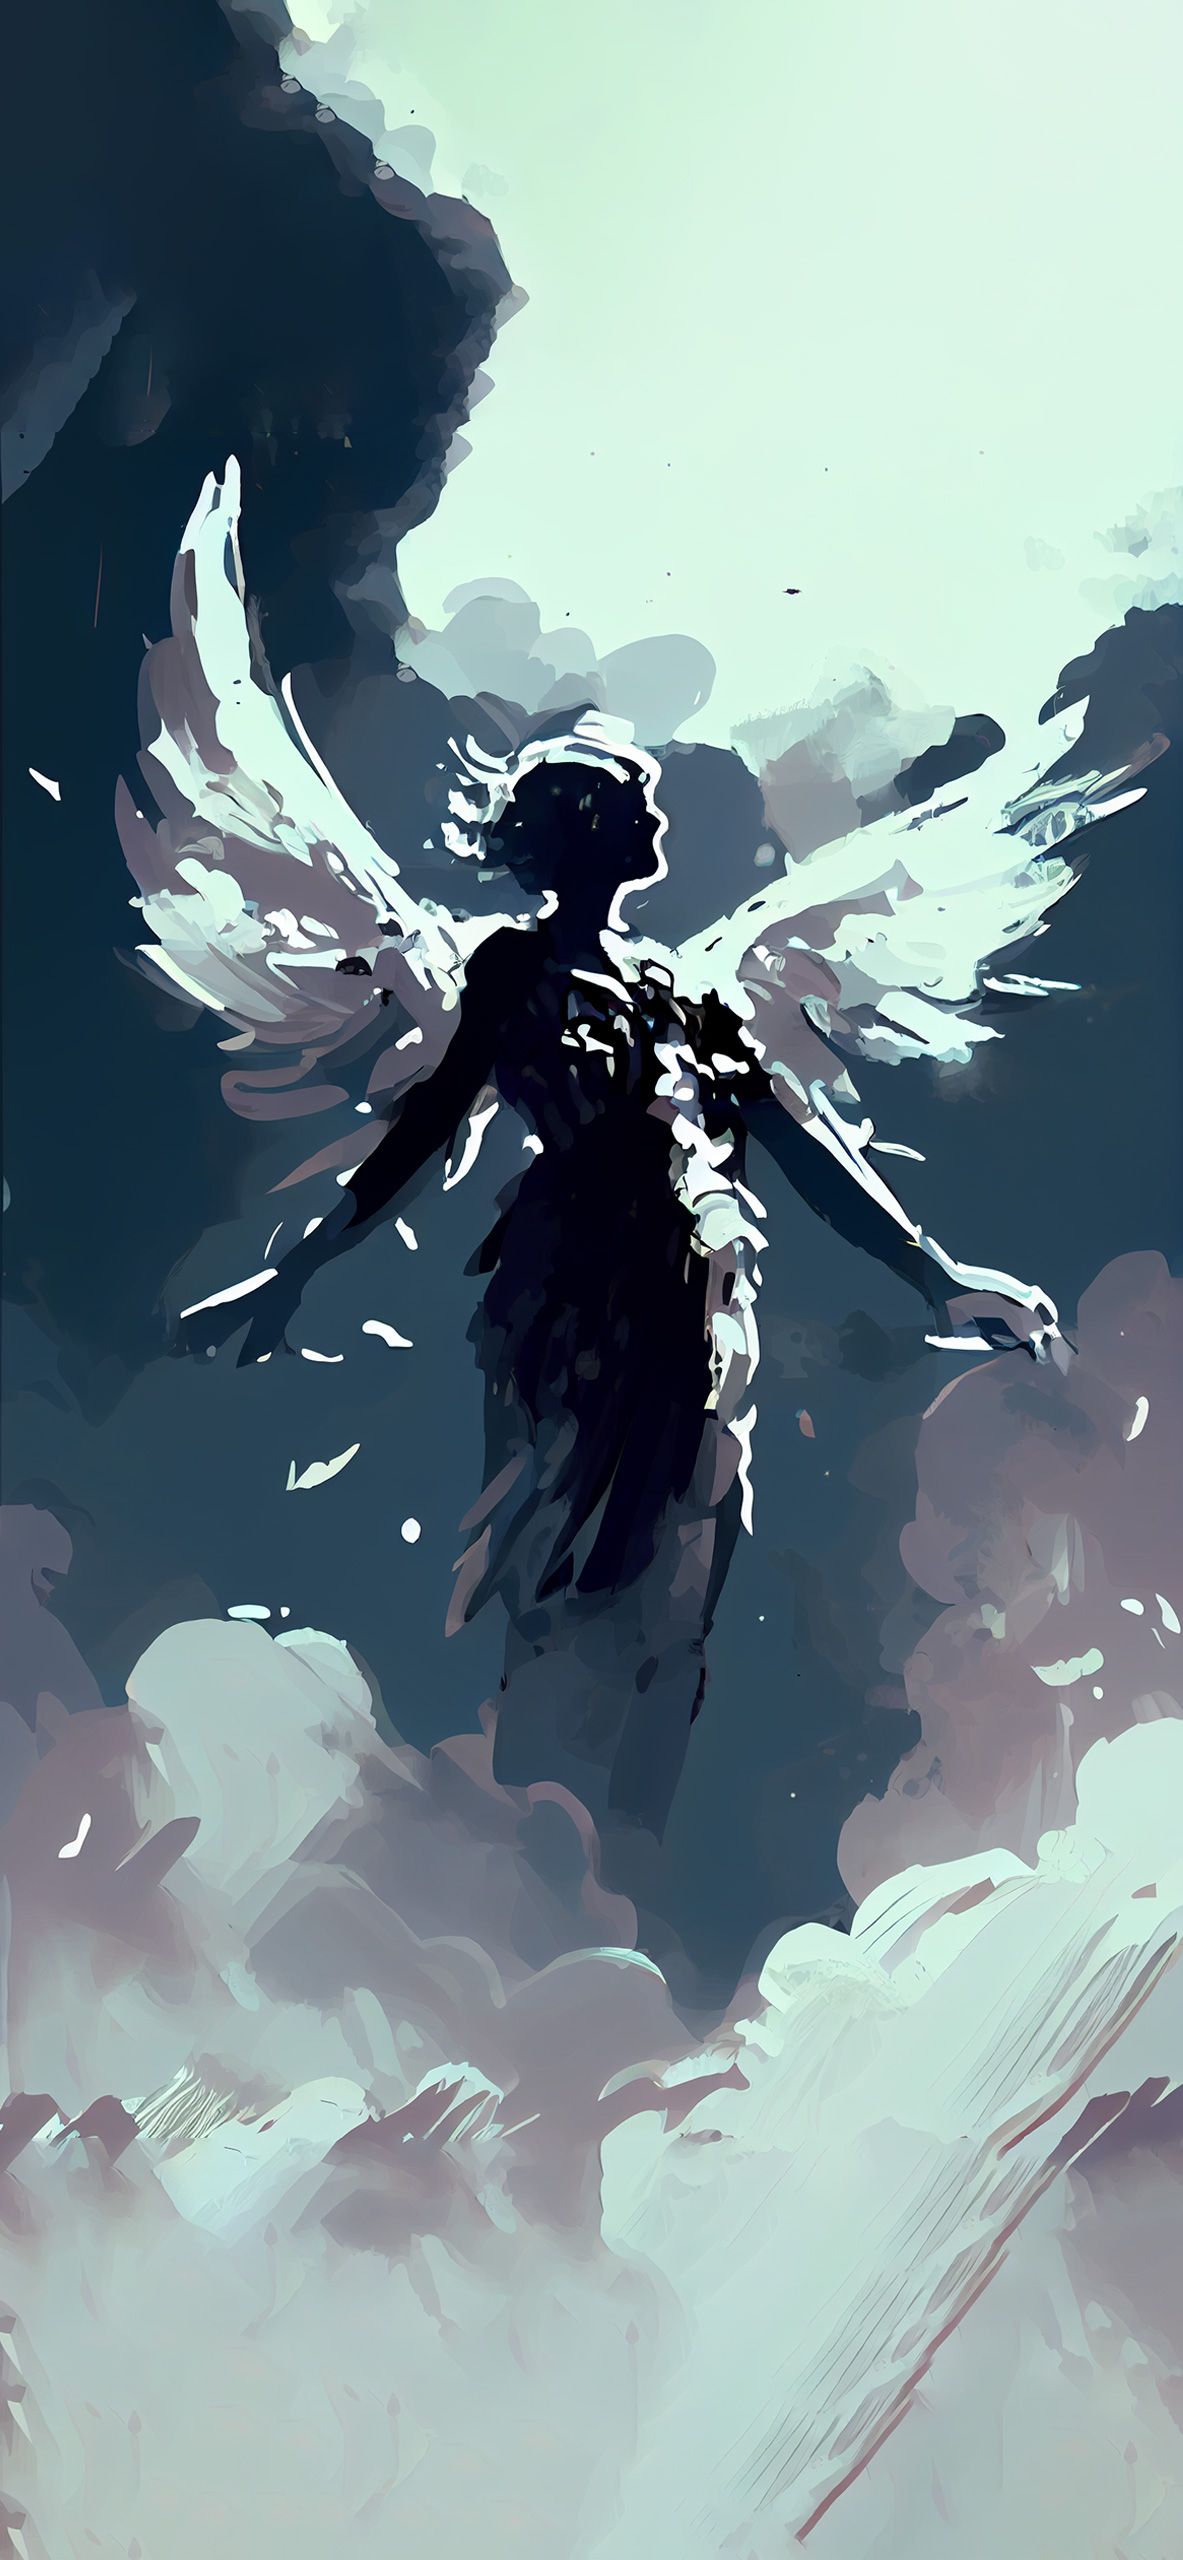 Angel in Sky Art Wallpaper Aesthetic Wallpaper for iPhone